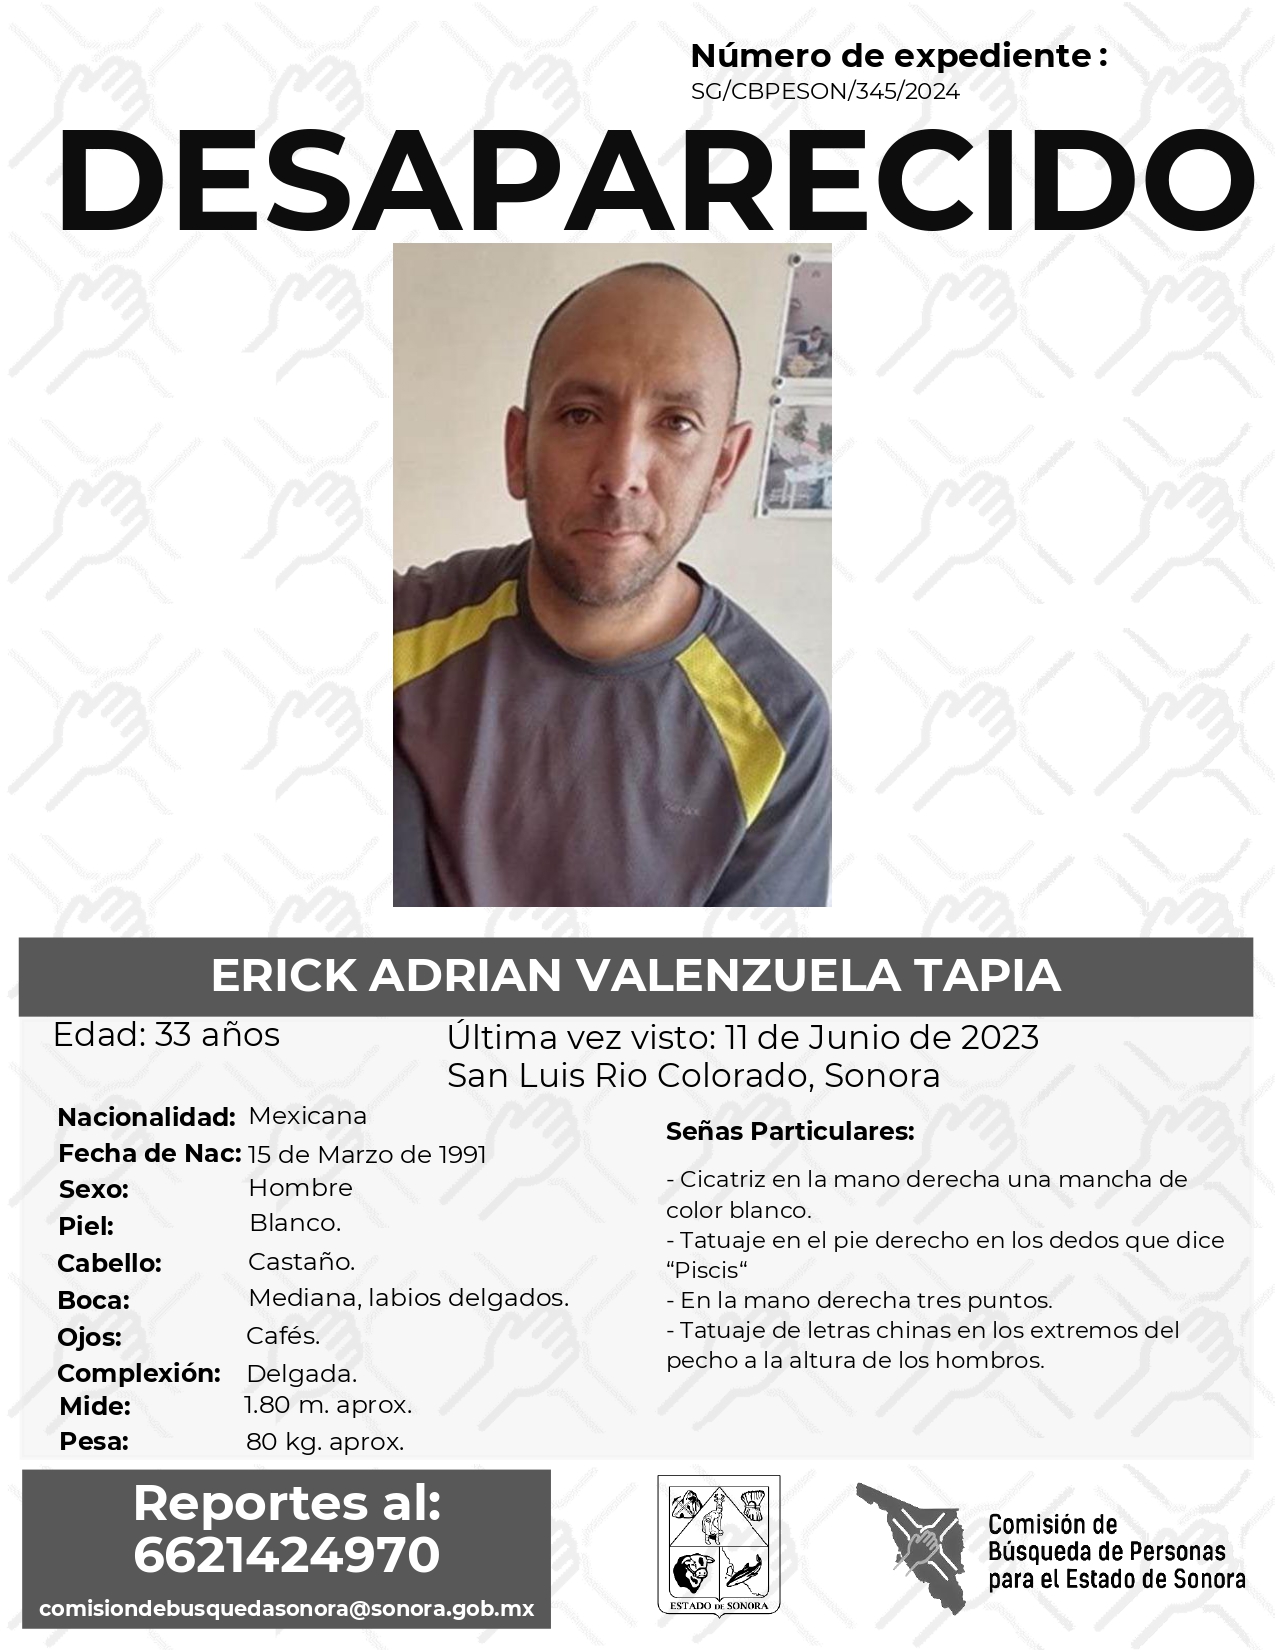 ERICK ADRIAN VALENZUELA TAPIA - DESAPARECIDO